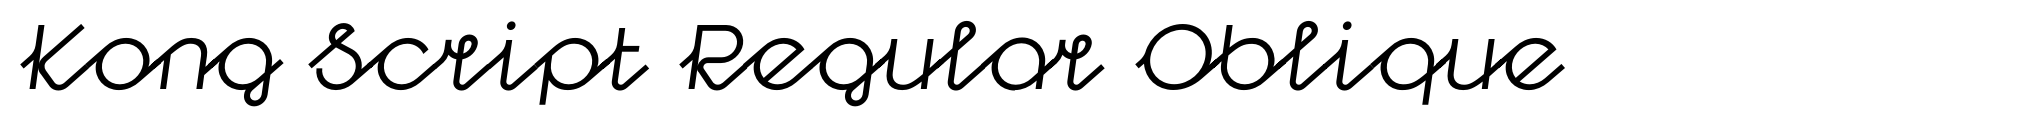 Kong Script Regular Oblique image